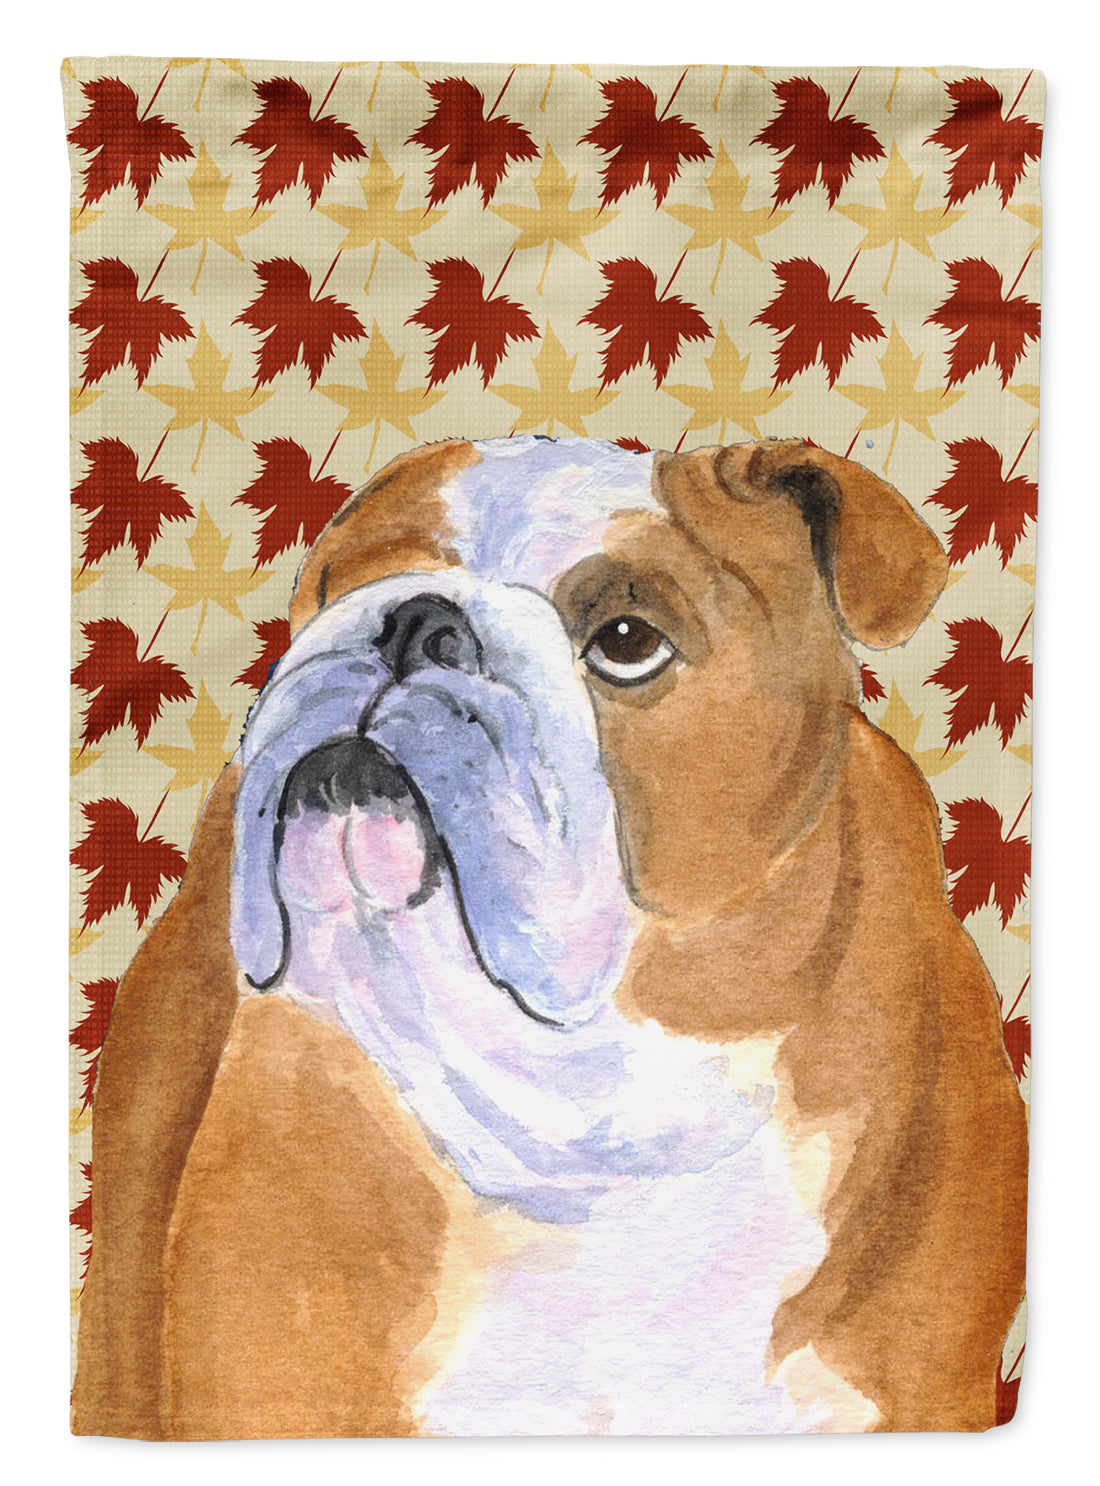 Bulldog English Fall Leaves Portrait Flag Garden Size.